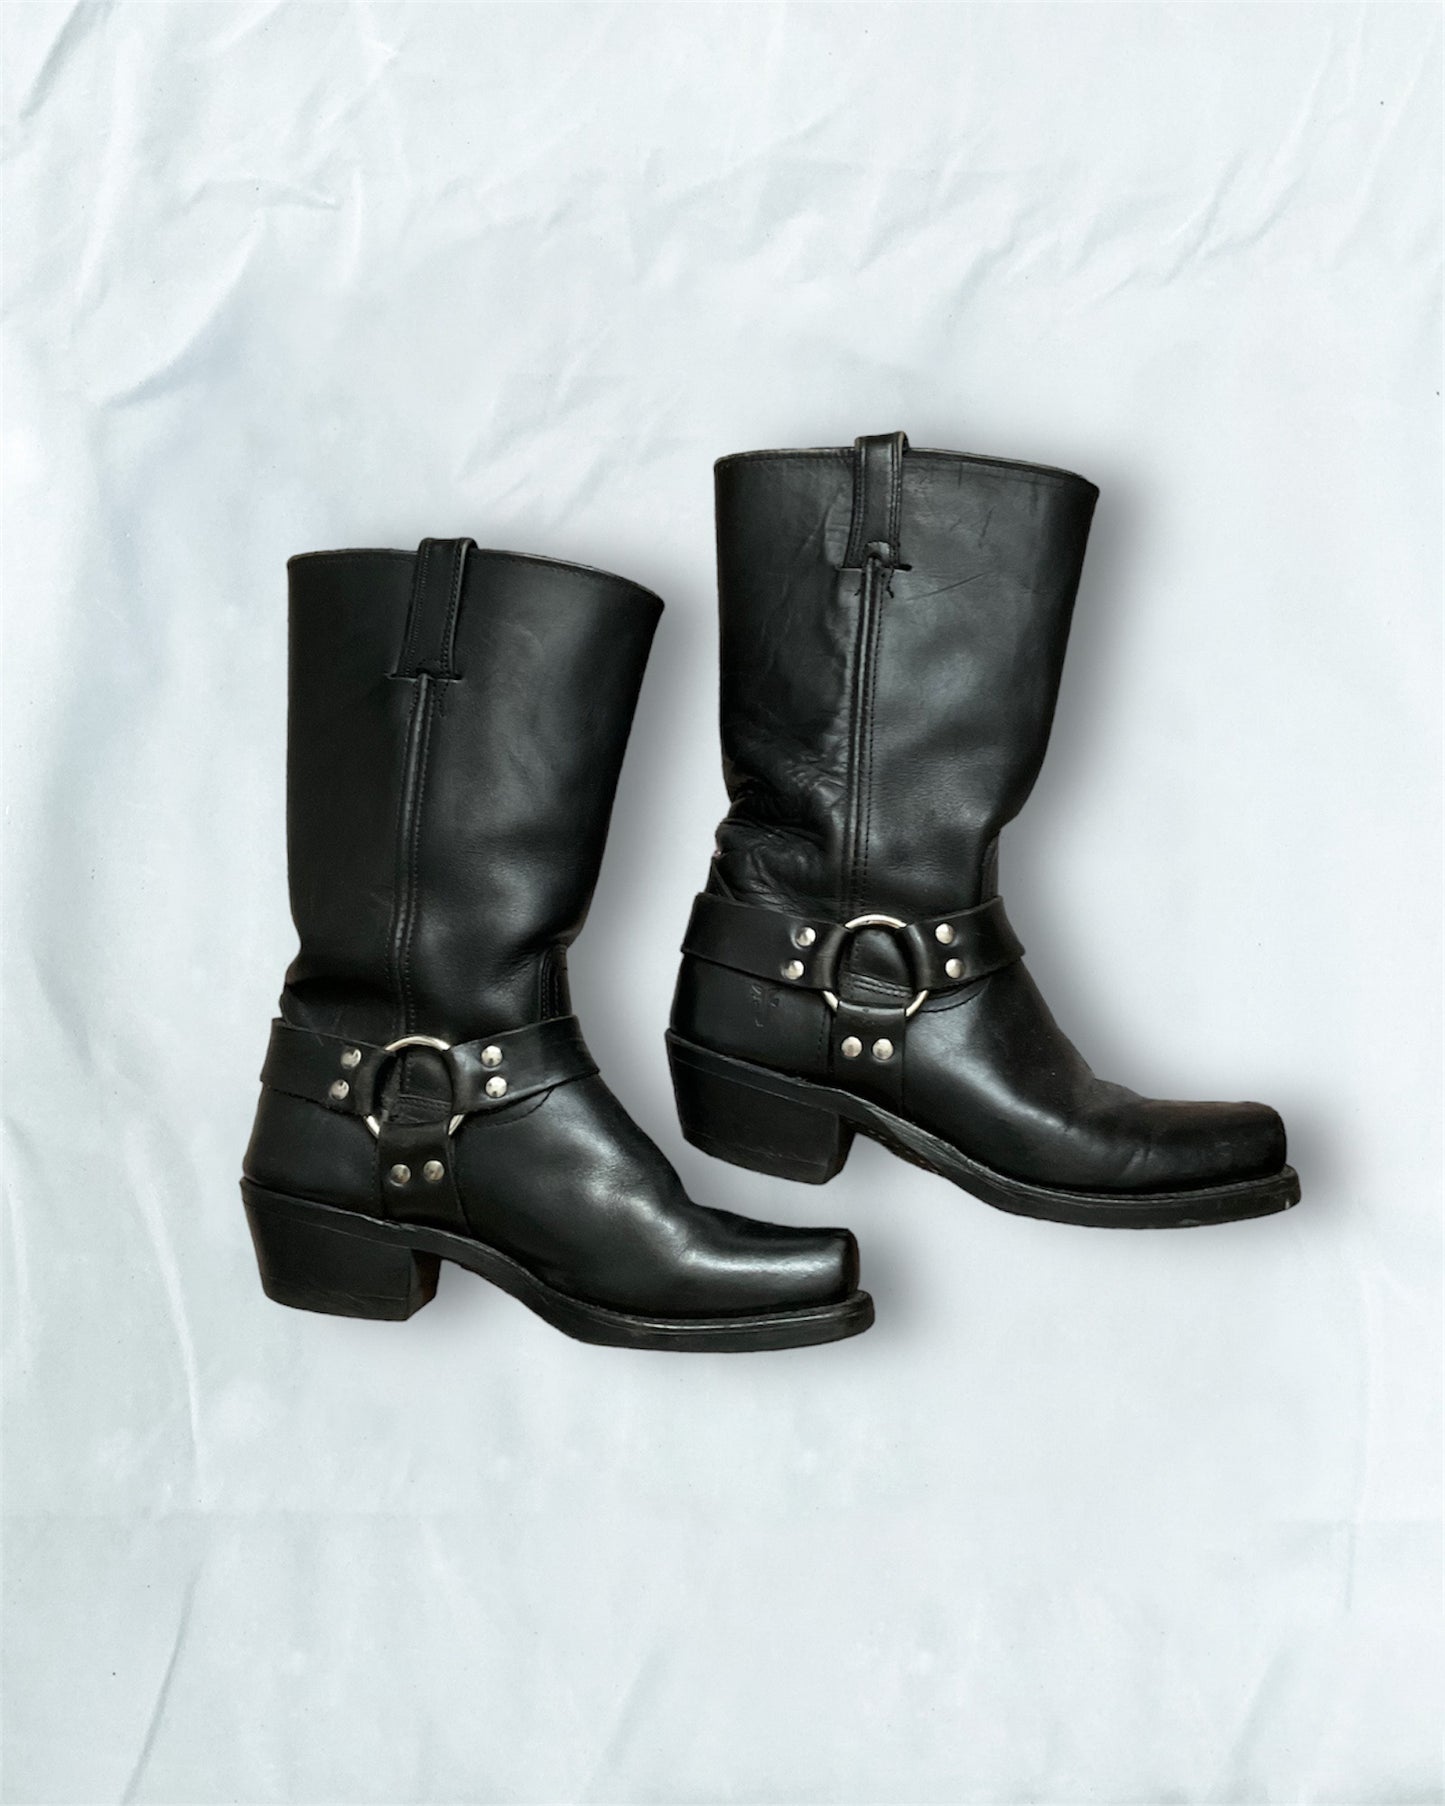 Frye Harness Black Bootss